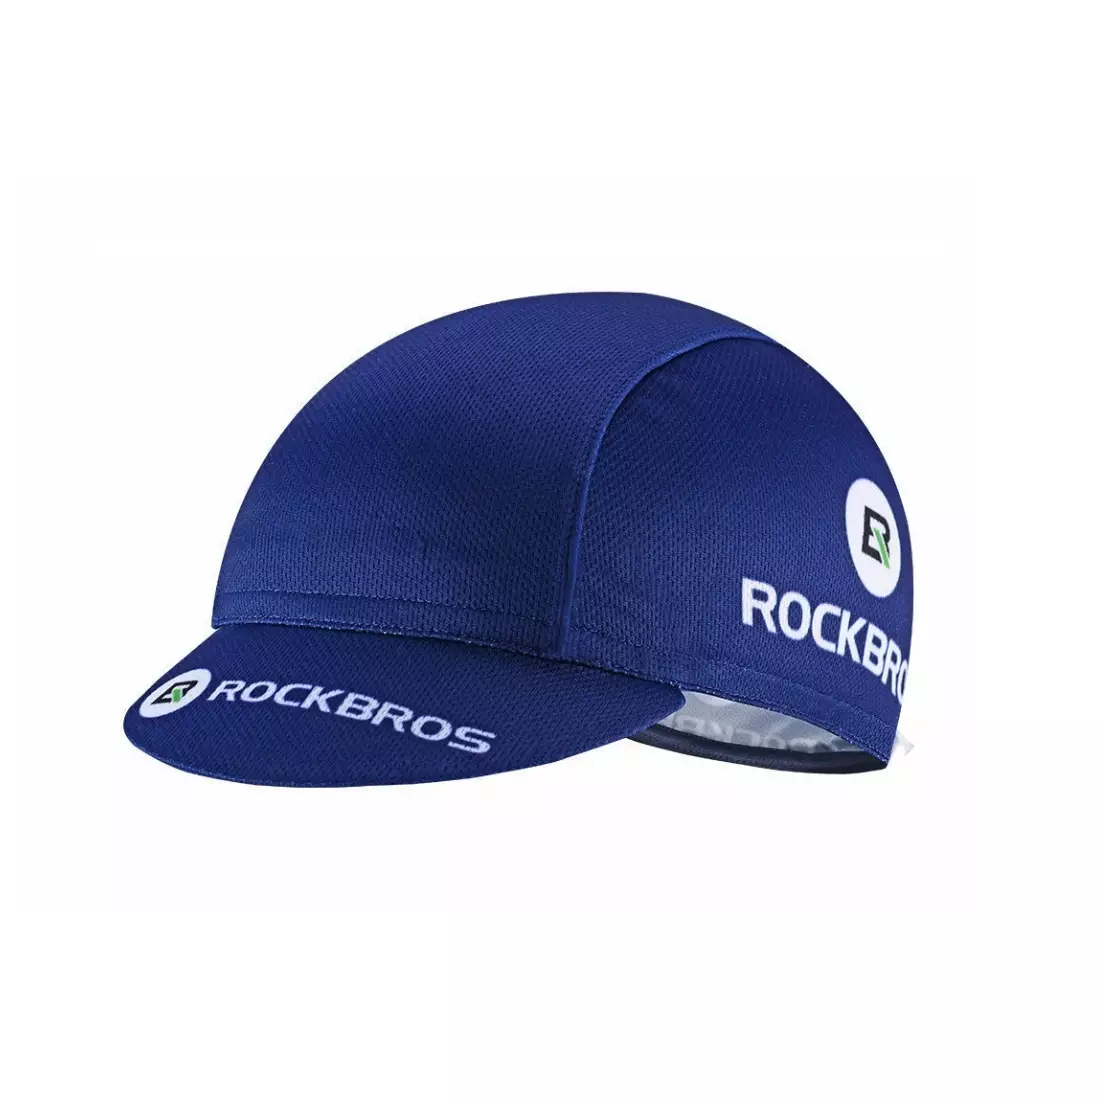 Rockbros cycling cap, blue MZ10012